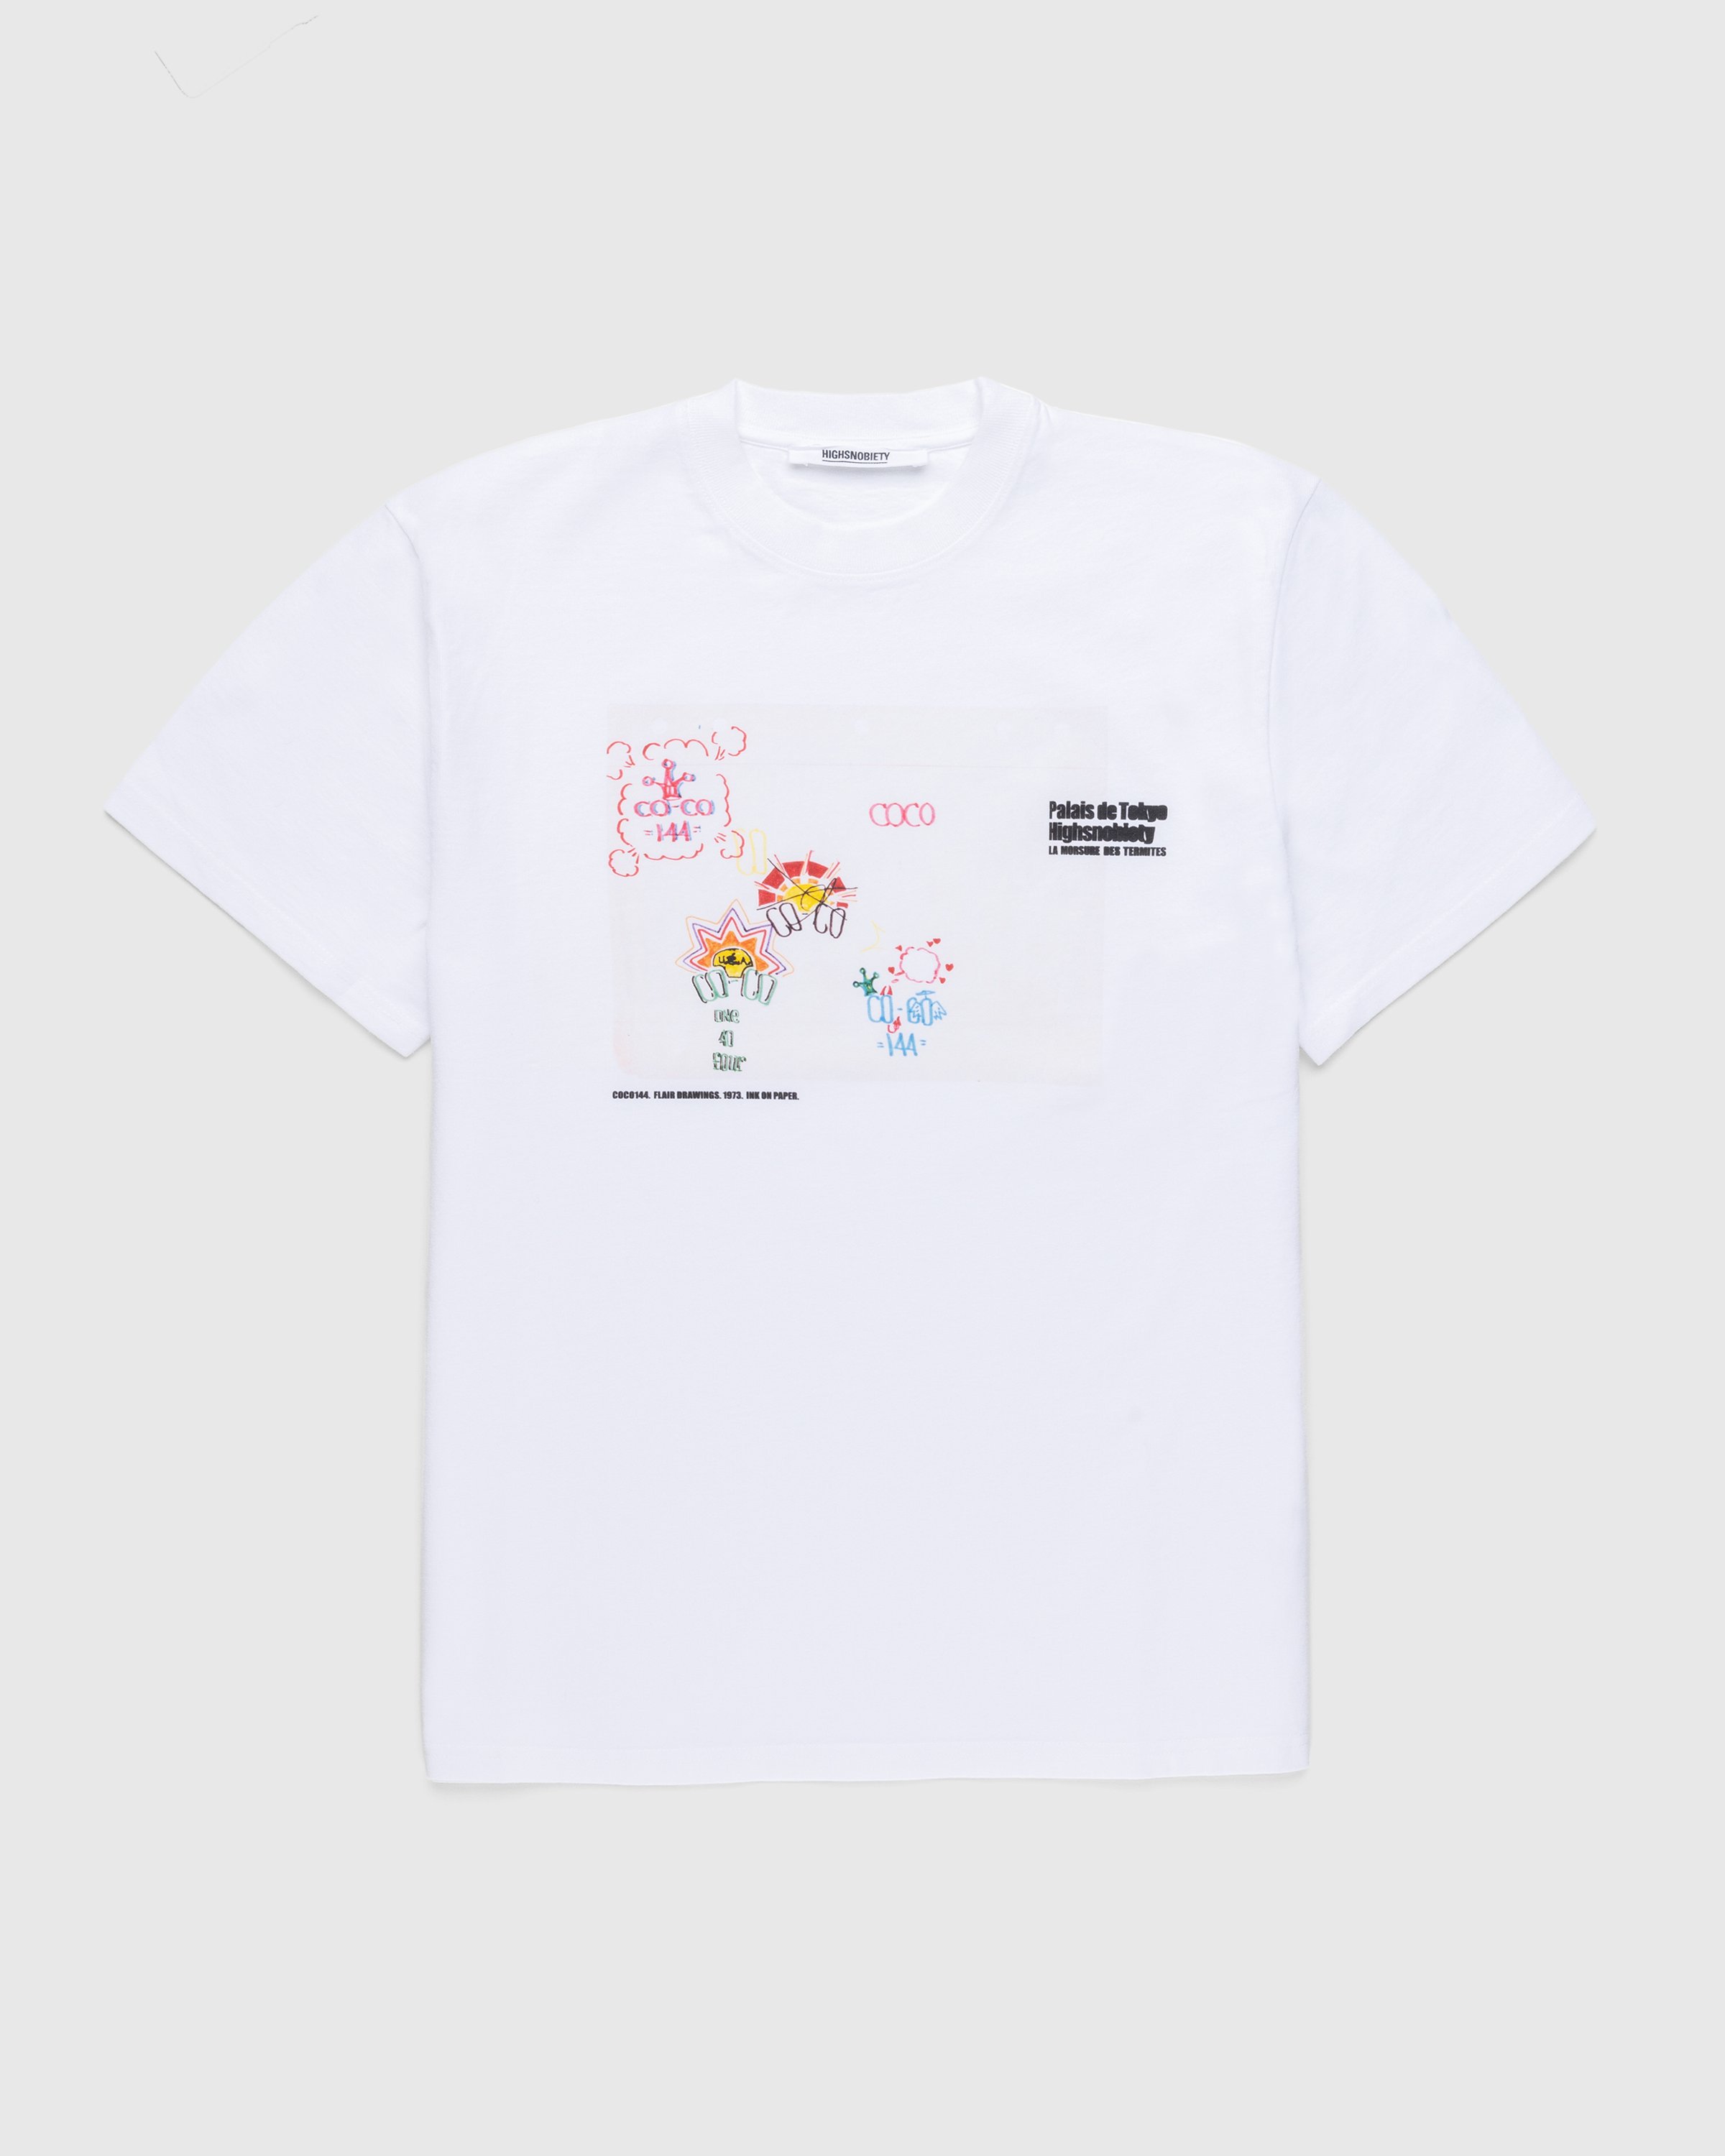 Palais de Tokyo x Highsnobiety - COCO 144 T-Shirt White - Clothing - White - Image 1